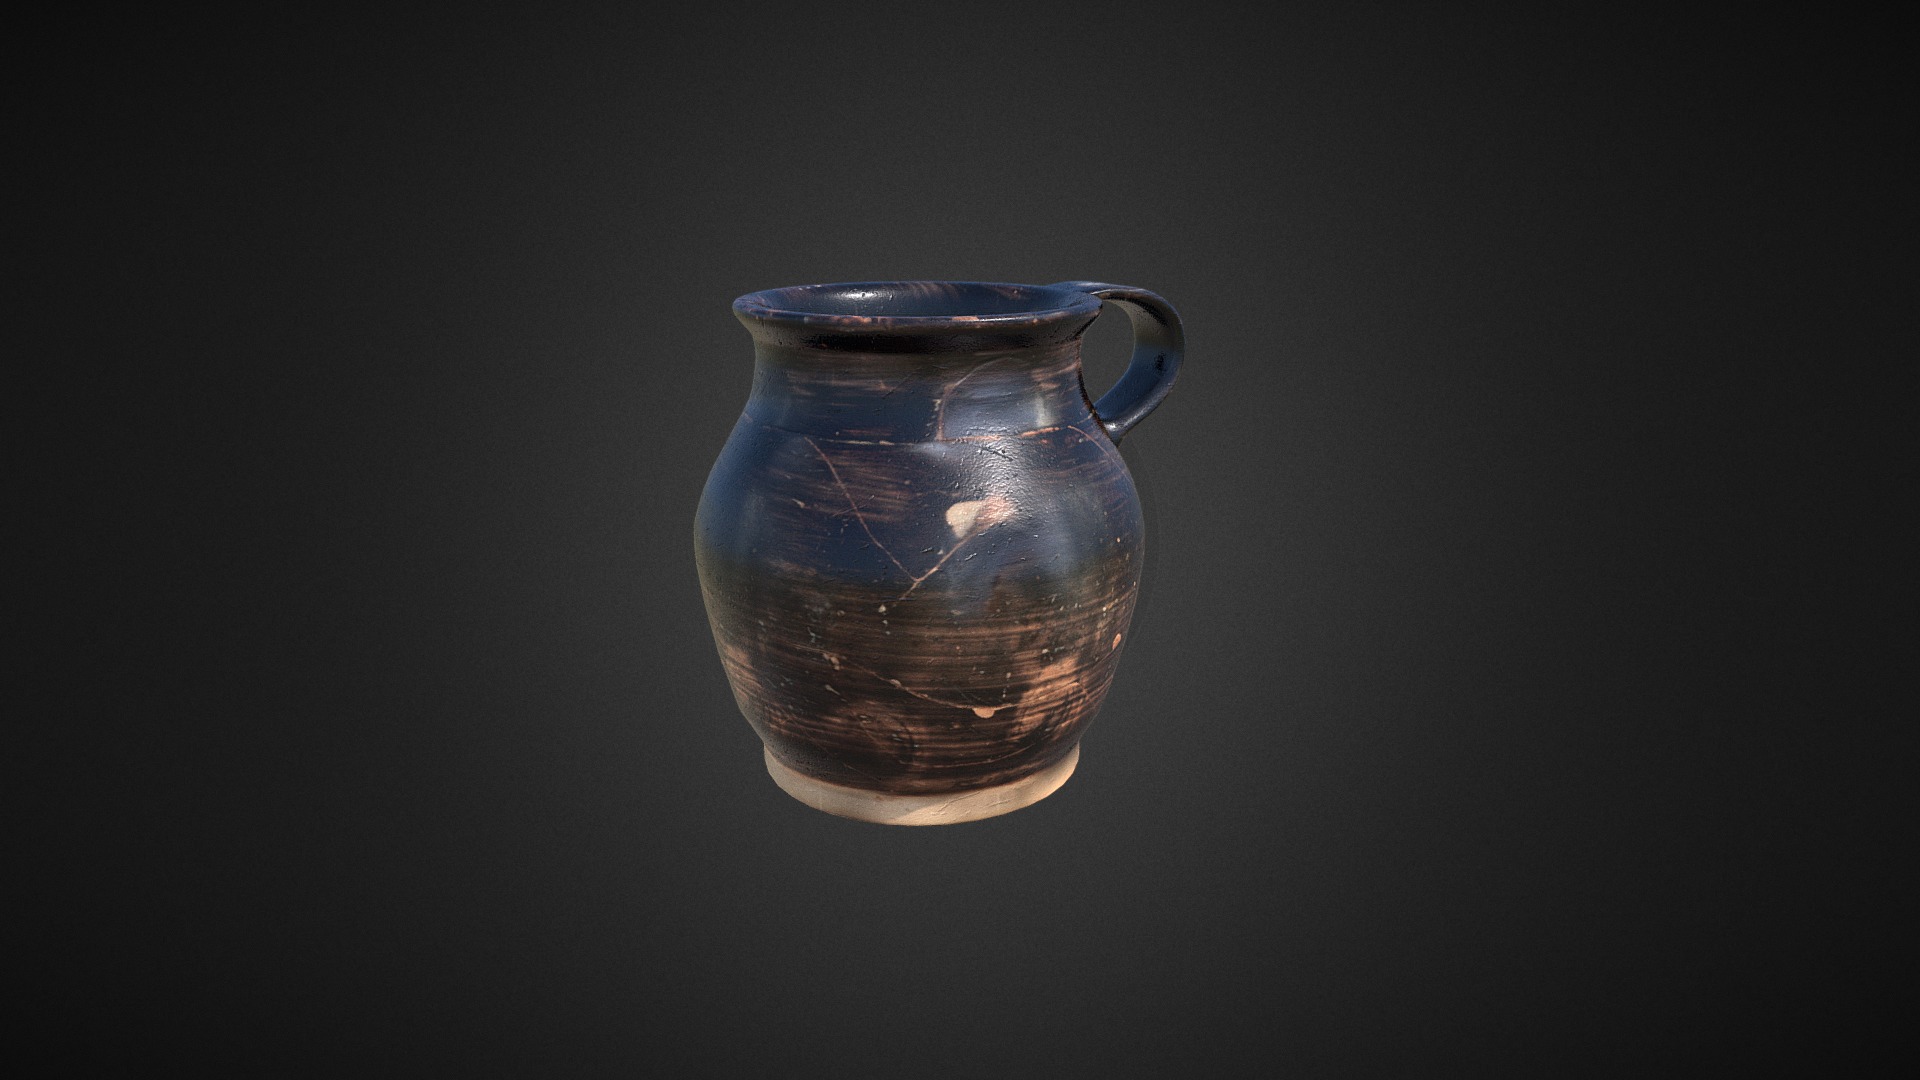 3D model Oinochoe, black paint greek vase – Vaso Oinochoe - This is a 3D model of the Oinochoe, black paint greek vase - Vaso Oinochoe. The 3D model is about a blue and white ceramic pitcher.